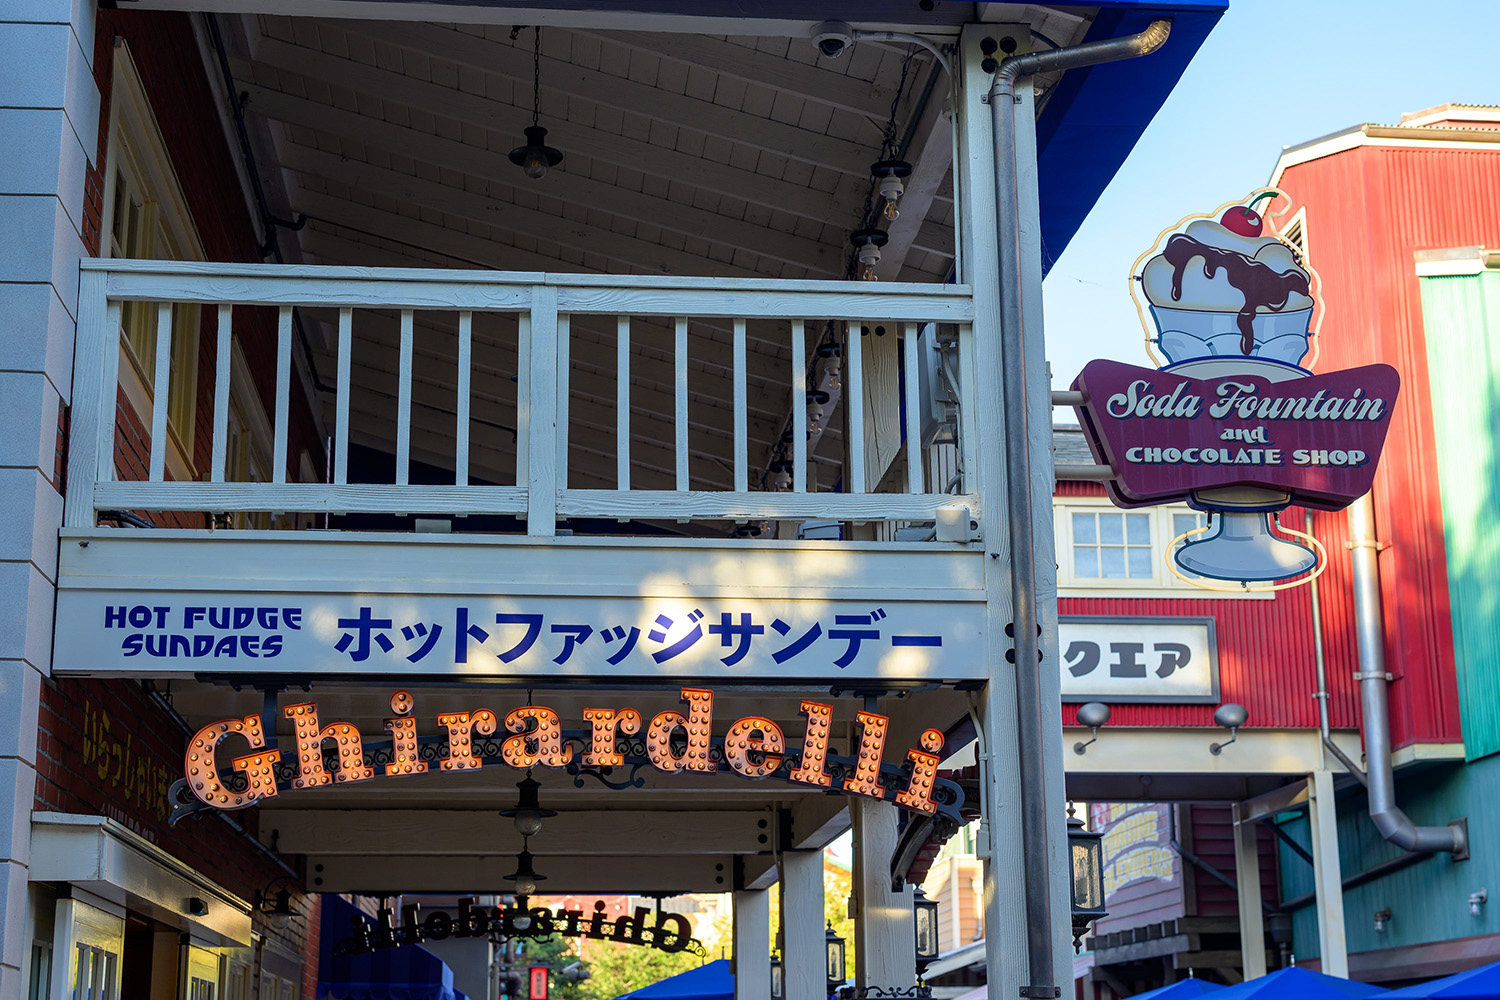 San Fransokyo Square at Disney California Adventure Park – Ghirardelli Soda Fountain and Chocolate Shop 